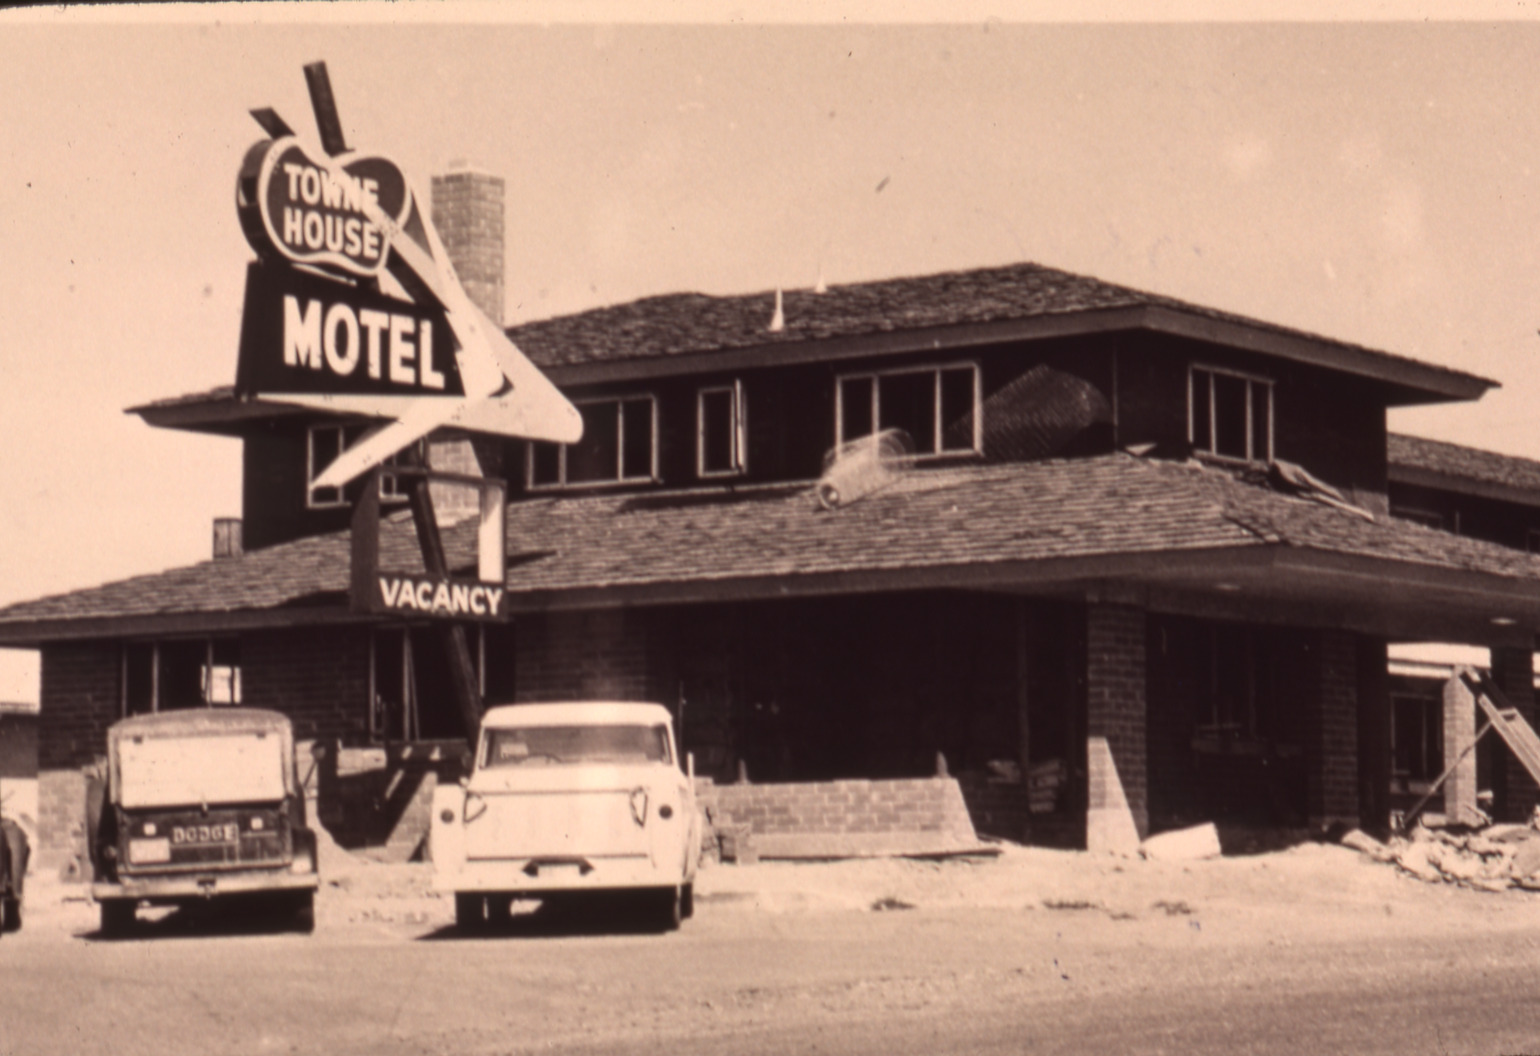 Townhouse Motel dual pylon sign, Elko, Nevada: photographic print